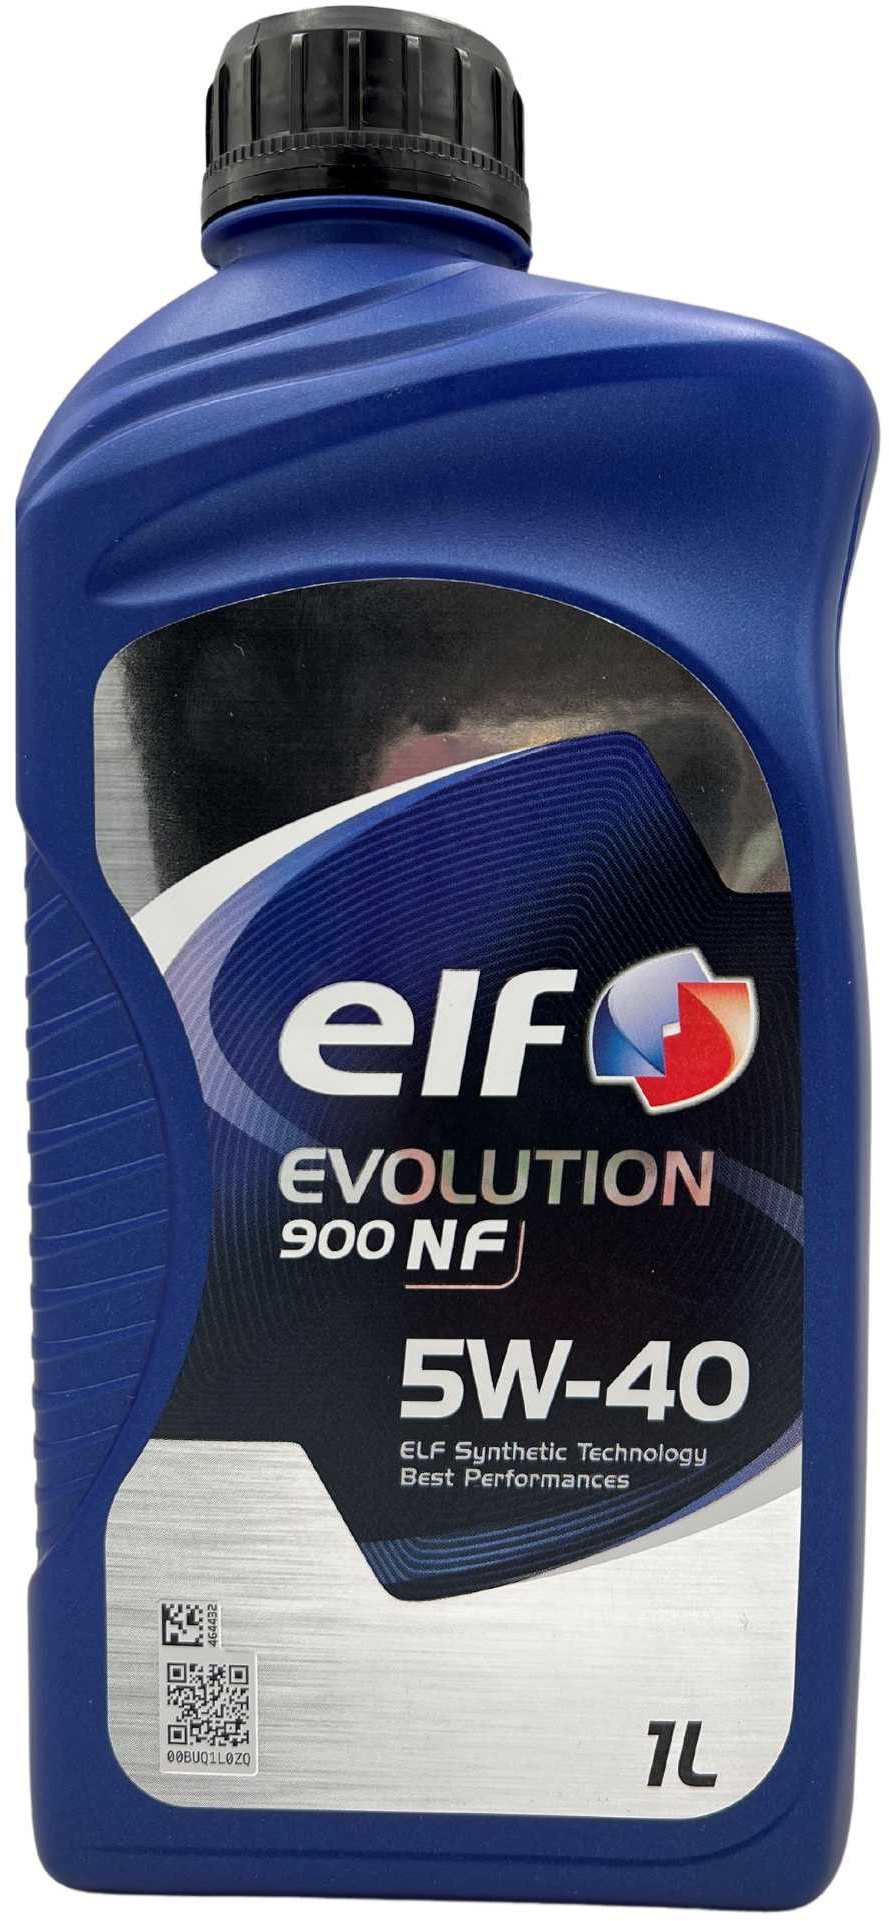 Elf Evolution 900 NF 5W-40 1 Liter